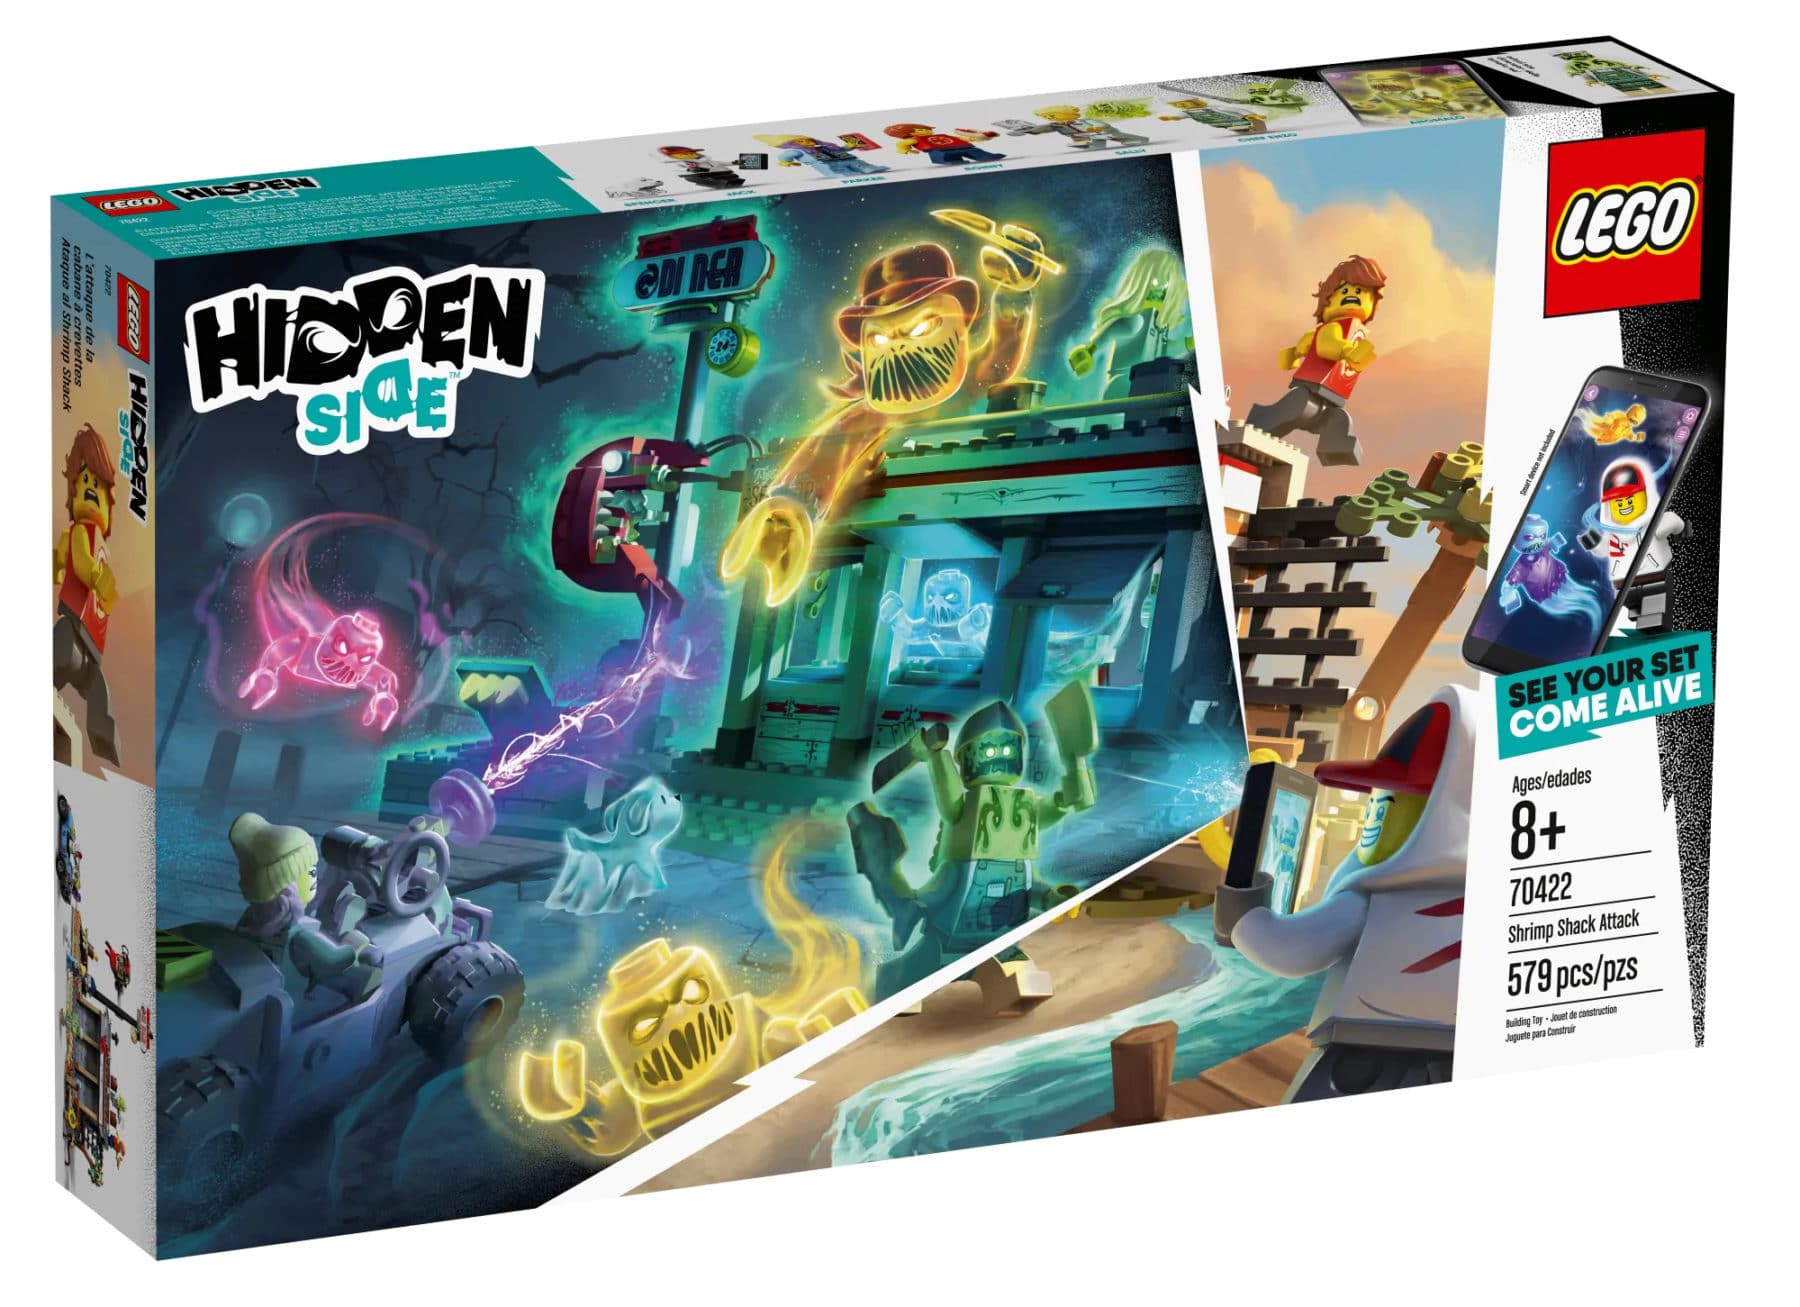 lego-hidden-side-diner-shrimp-shack-attack-70422-box-front-2019 zusammengebaut.com